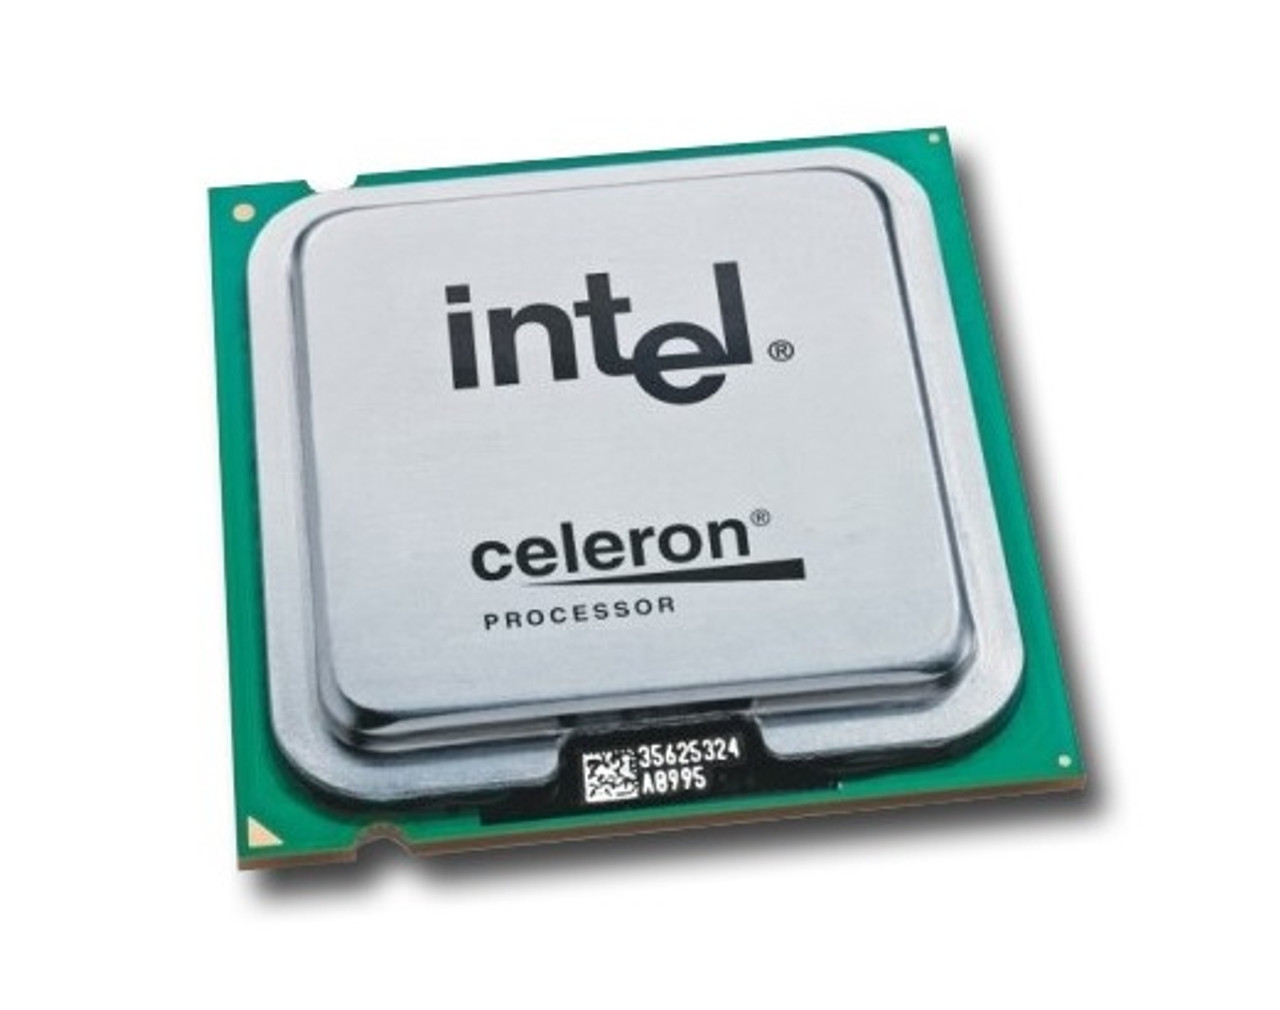 JM80547RE072256 - Intel Celeron D 335J 2.80GHz 533MHz FSB 256KB L2 Cache Socket 775 Processor